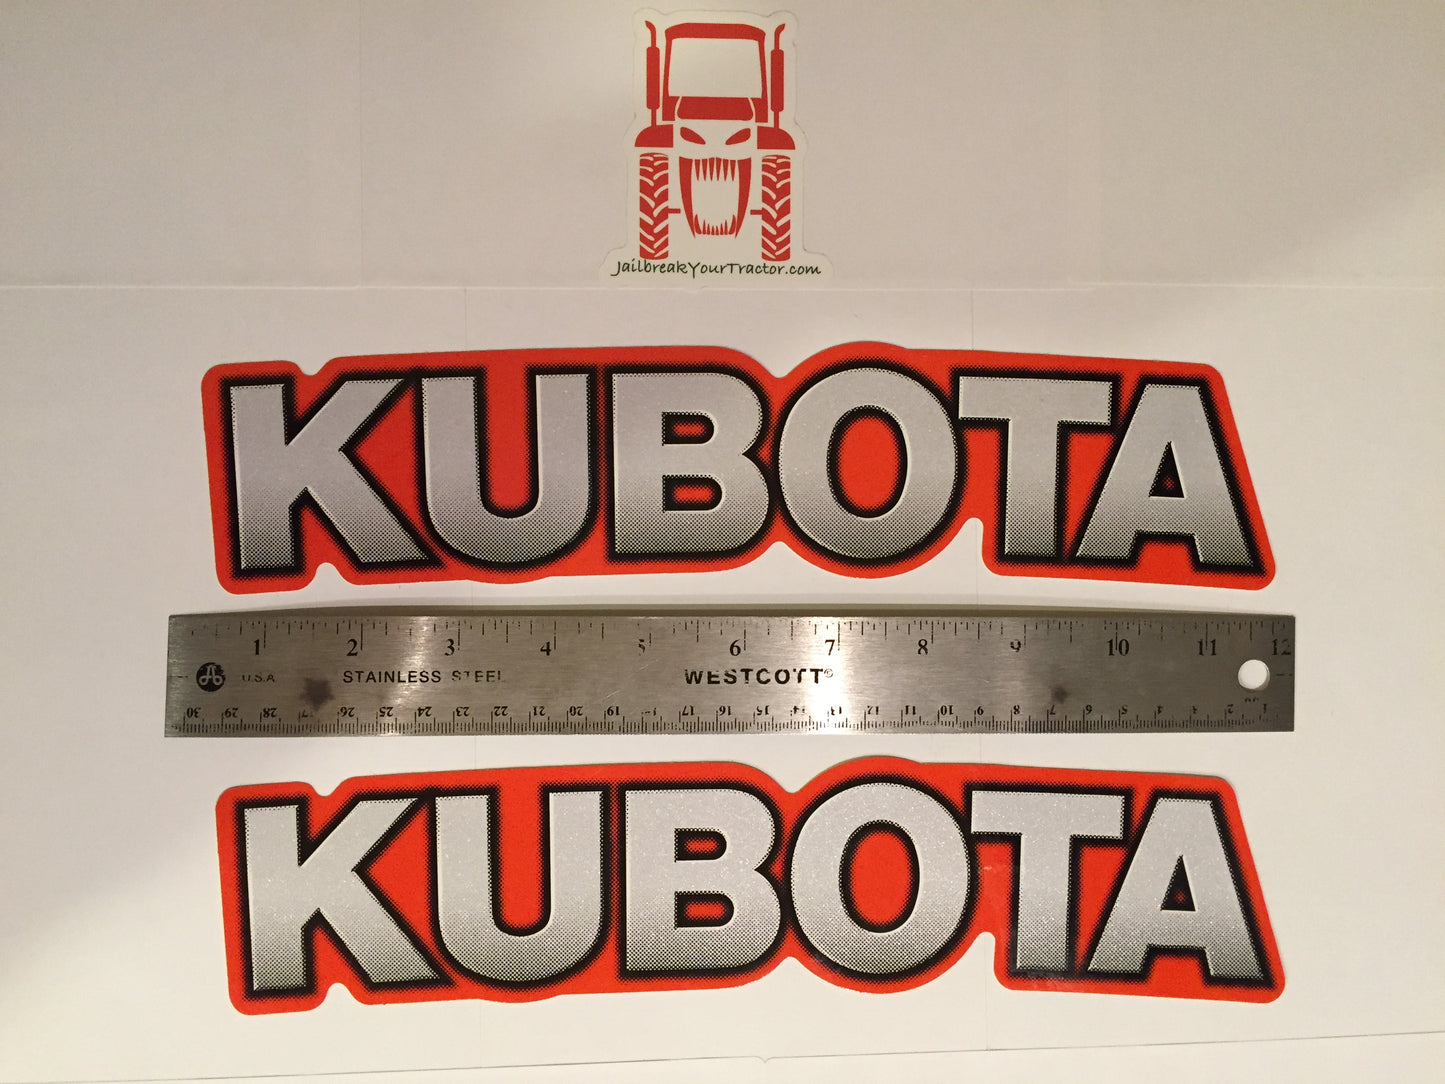 2x LG OEM Genuine Kubota Tractor BX B L Kit Tractor Decals Sticker Set UV proof with applicator